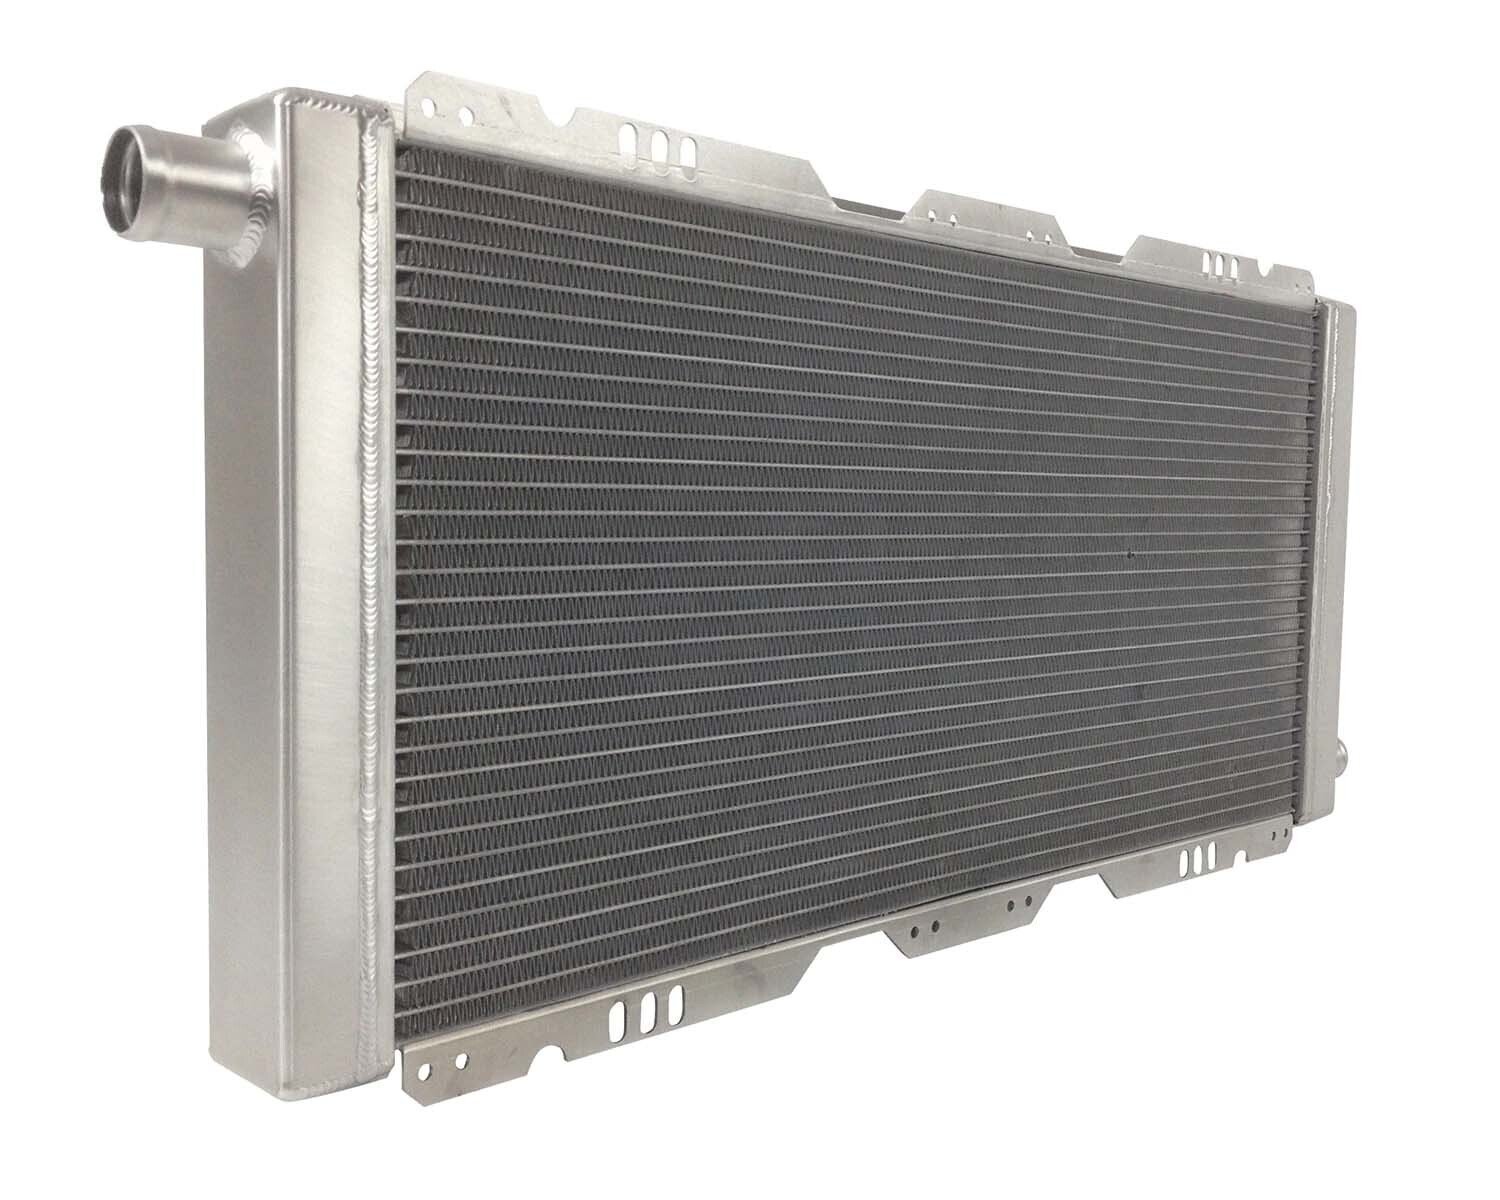 VX220 / Elise / Exige pro alloy tripple pass radiator